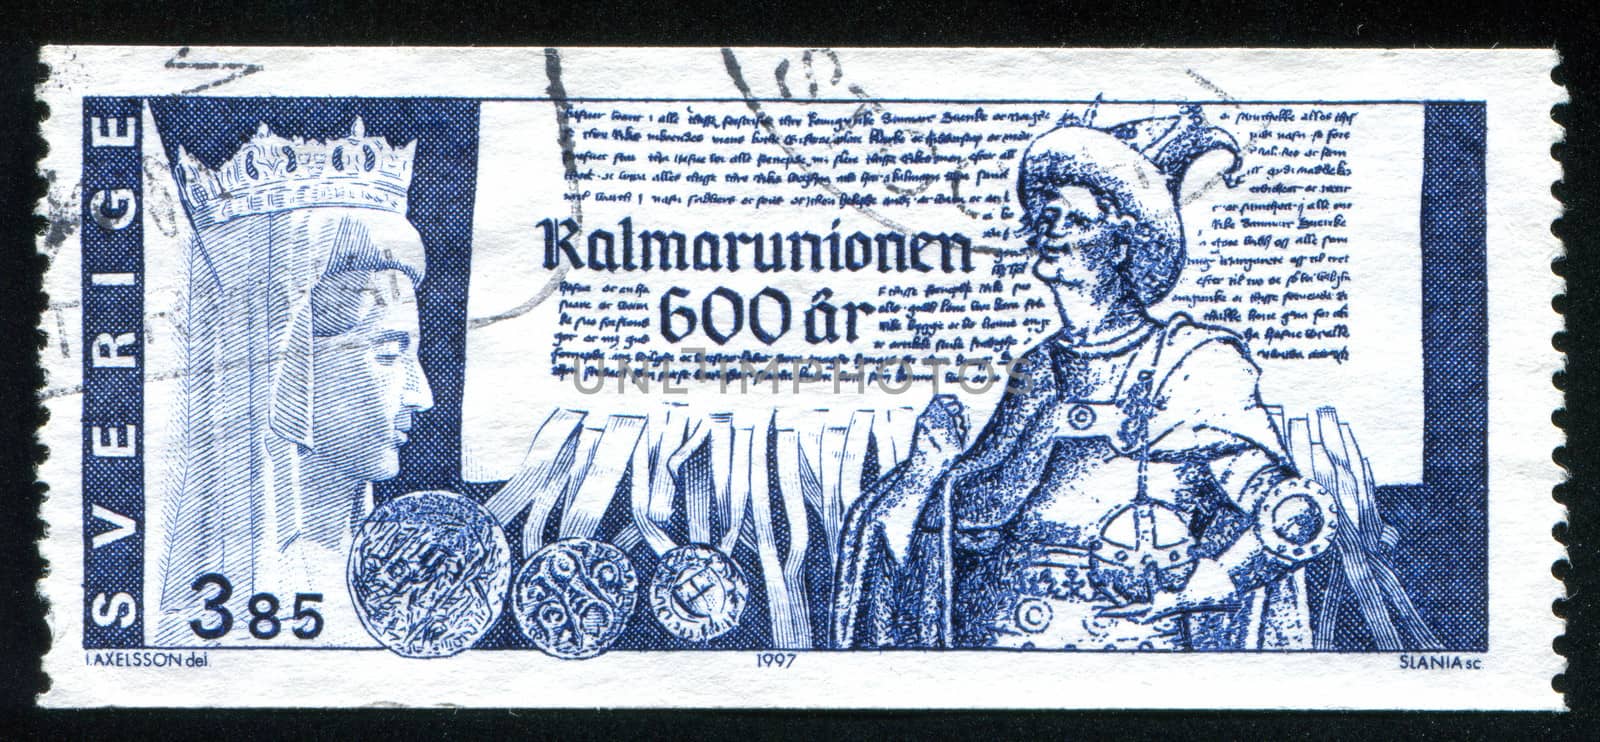 SWEDEN - CIRCA 1997: stamp printed by Sweden, shows Queen Margareta, Erik of Pomerania, coronation document, circa 1997